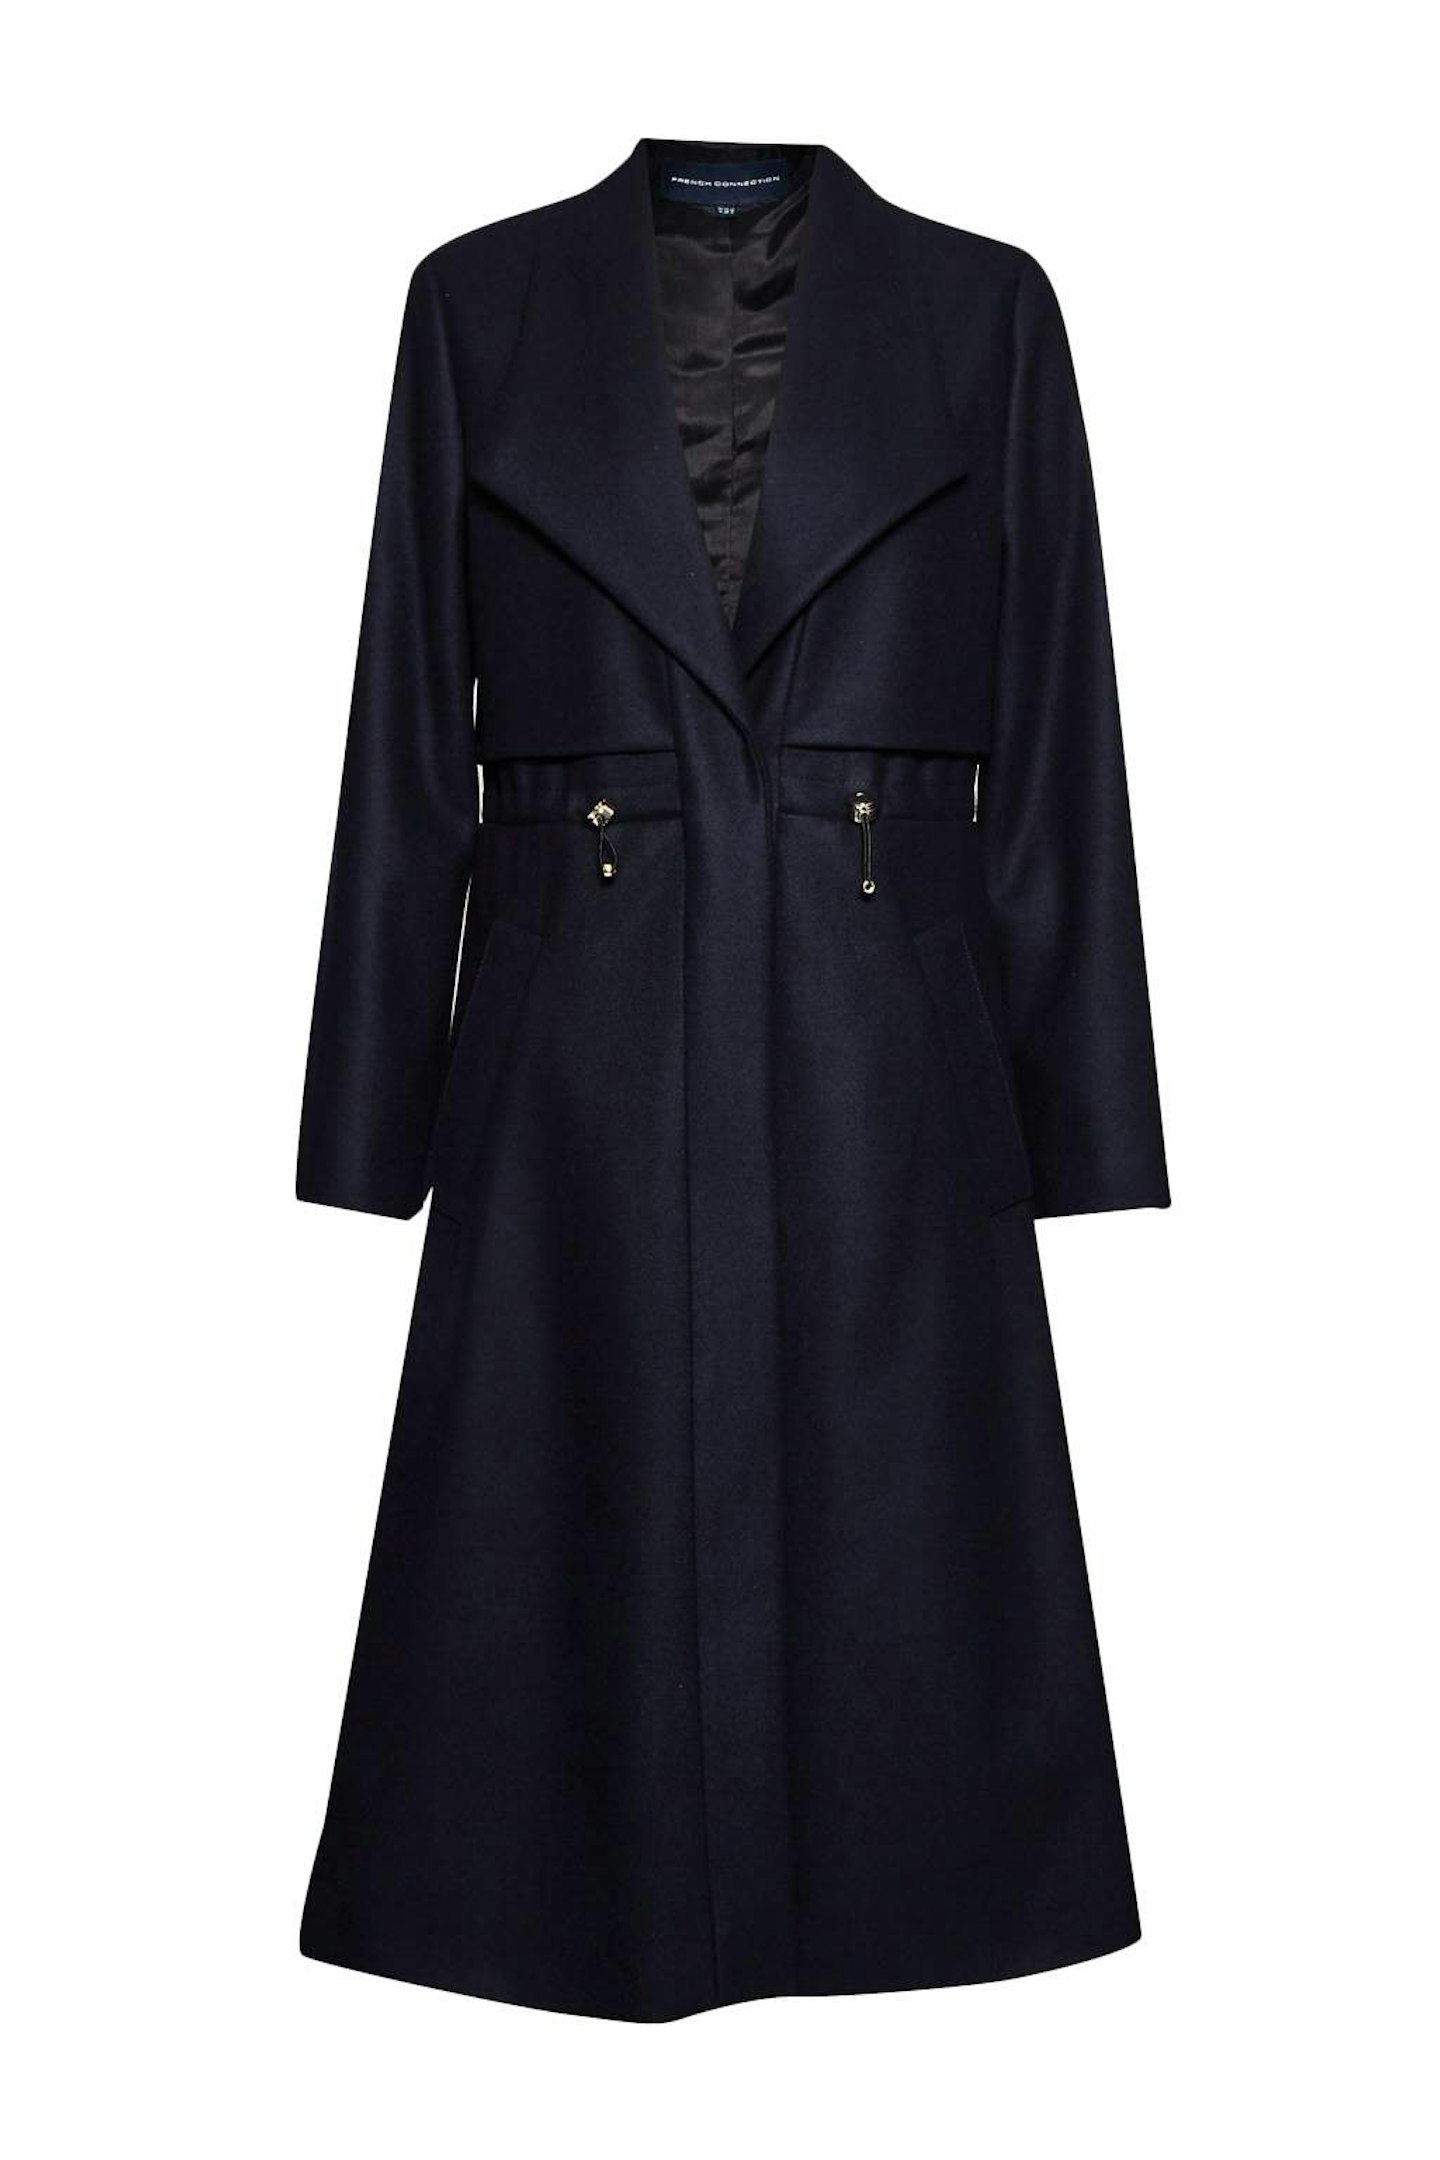 The Best Coats To Buy For Autumn/Winter - Grazia